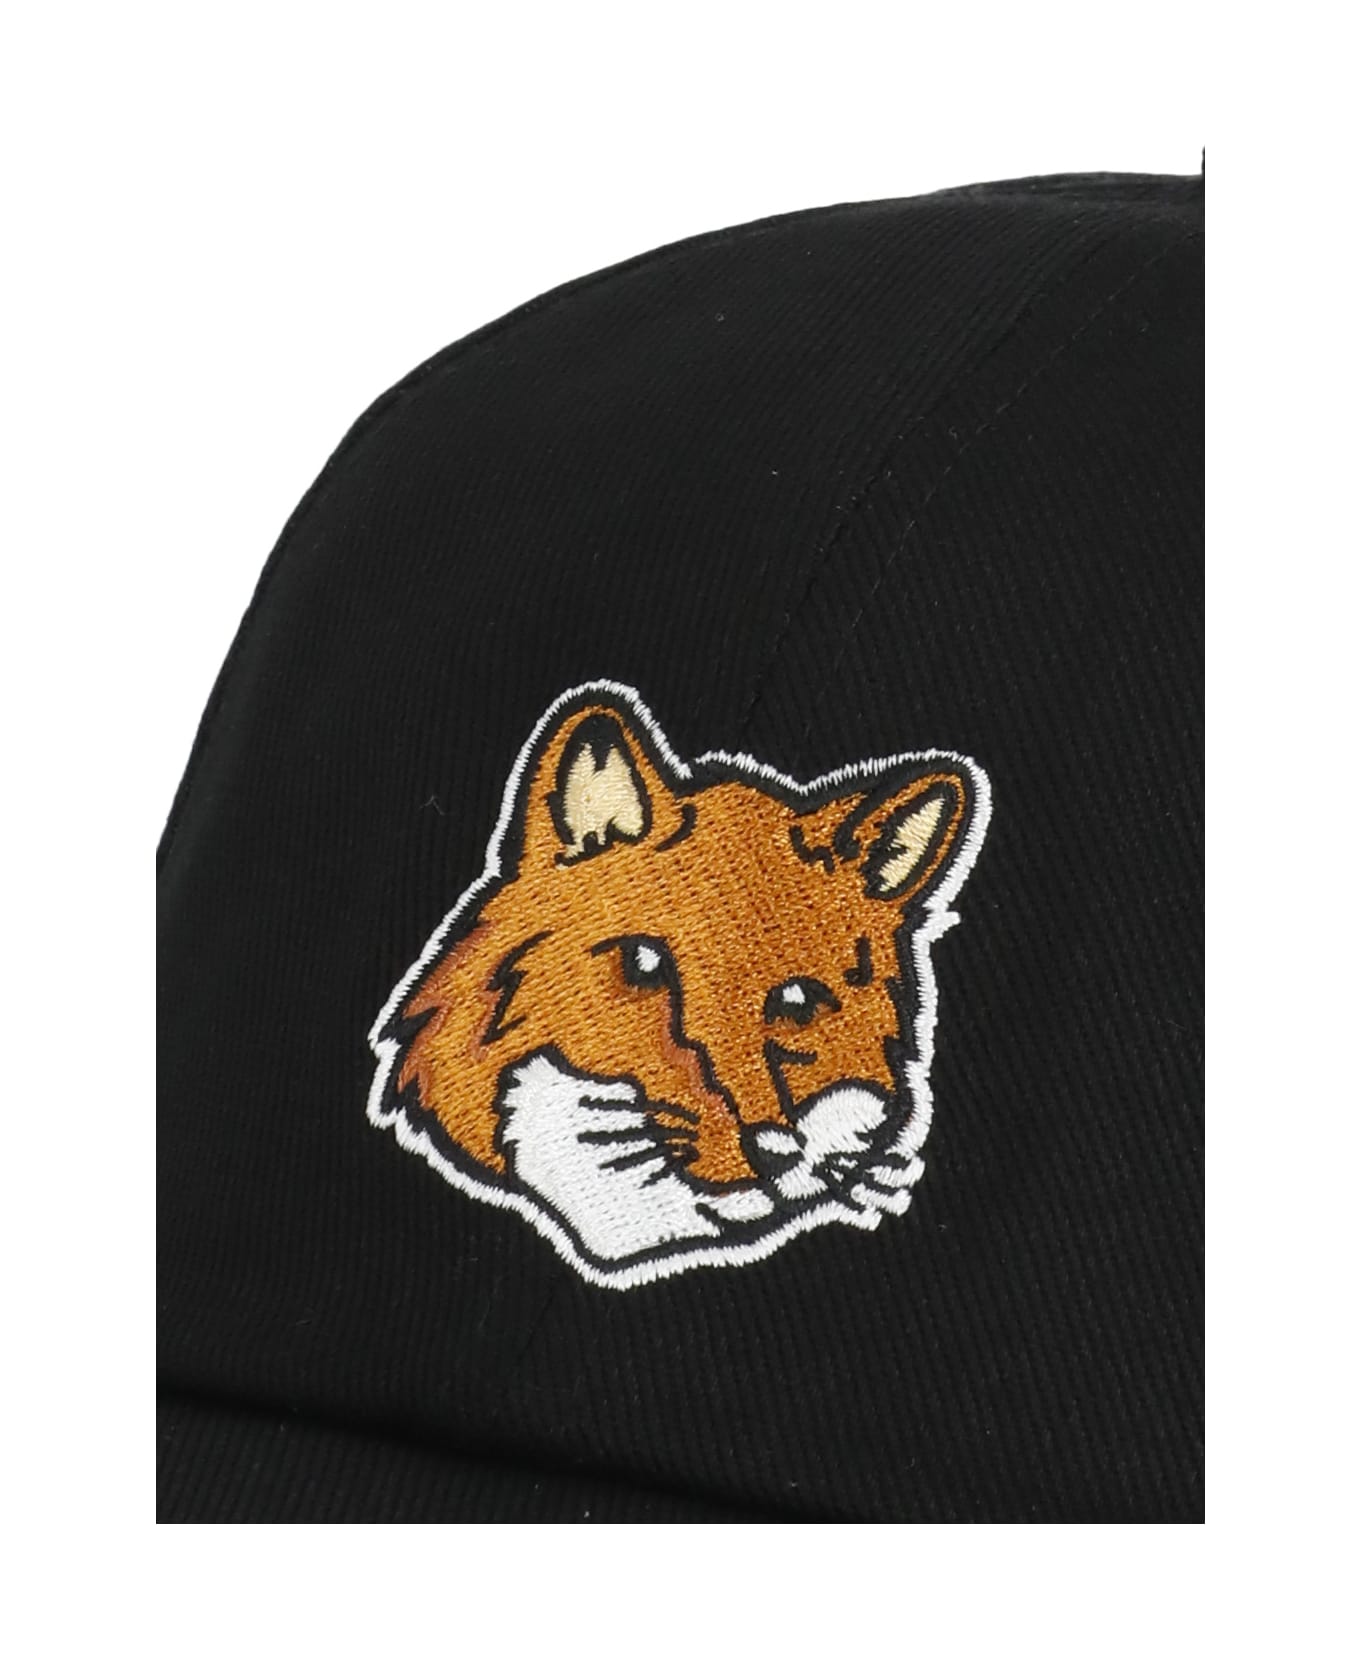 Maison Kitsuné Baseball Cap With Logo - Black 帽子